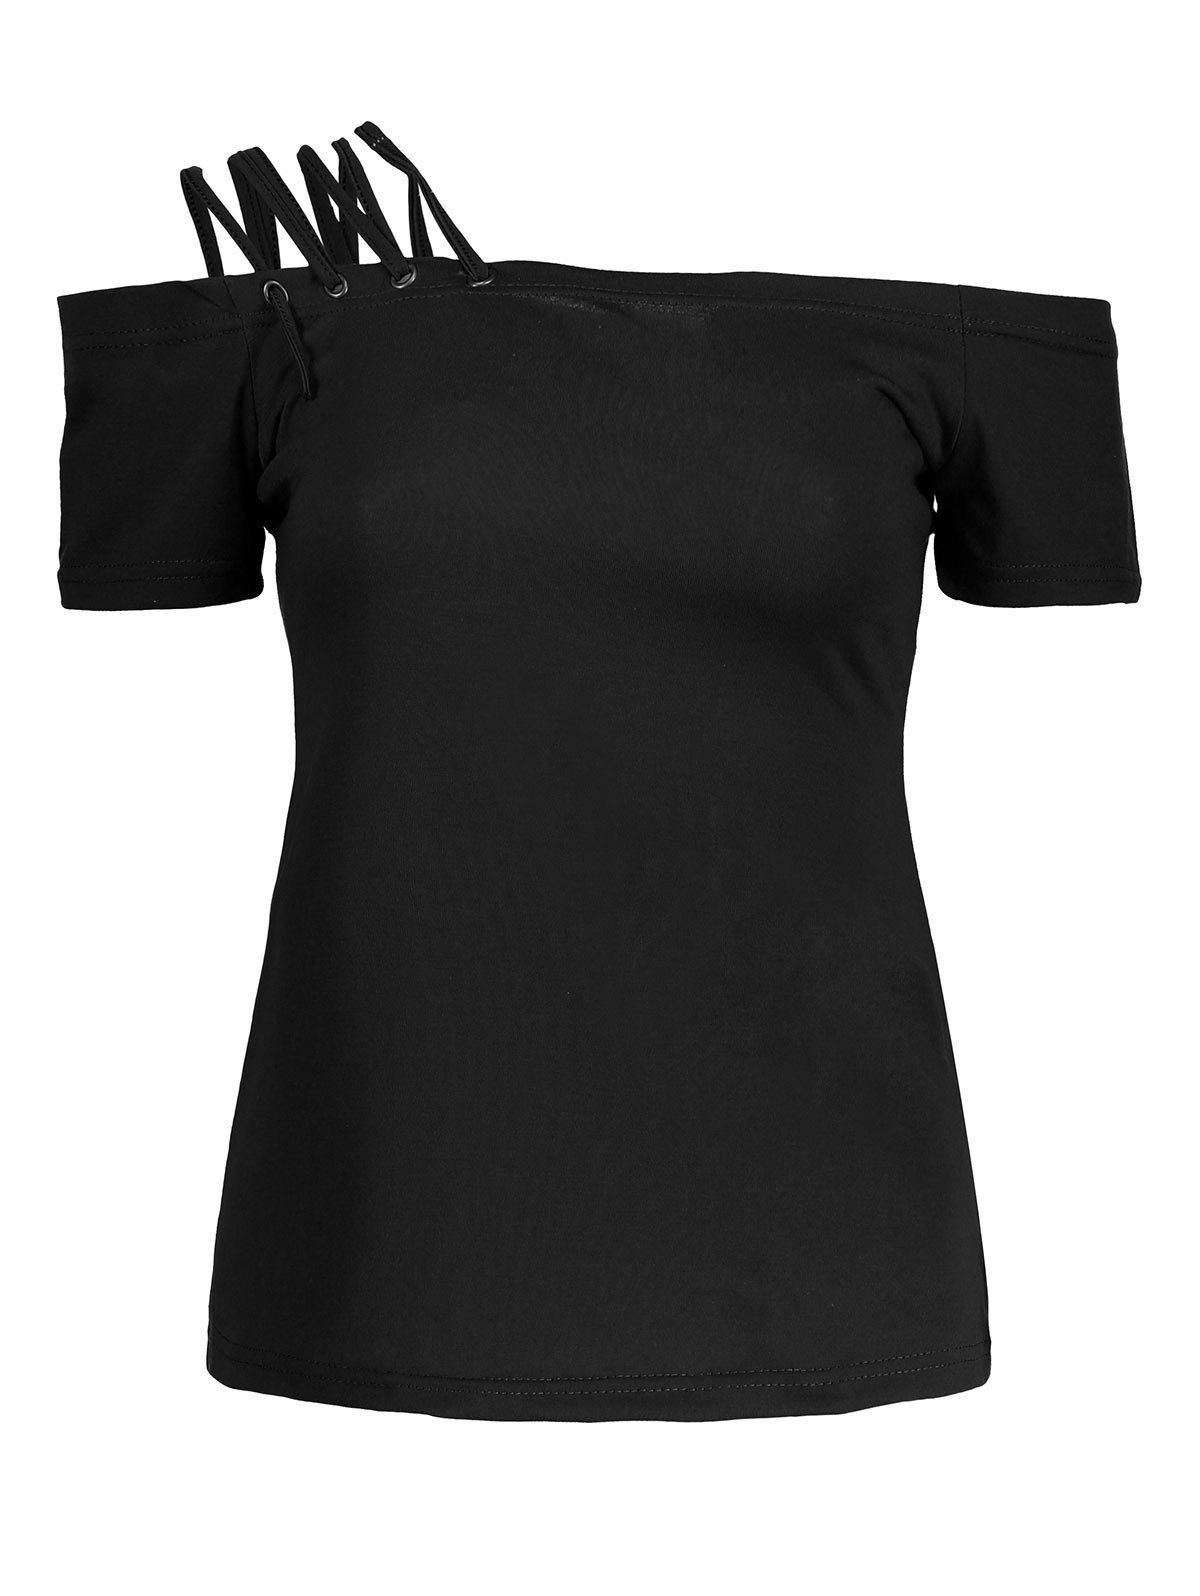 Black Xl Short Sleeve Lace Up Tee | RoseGal.com